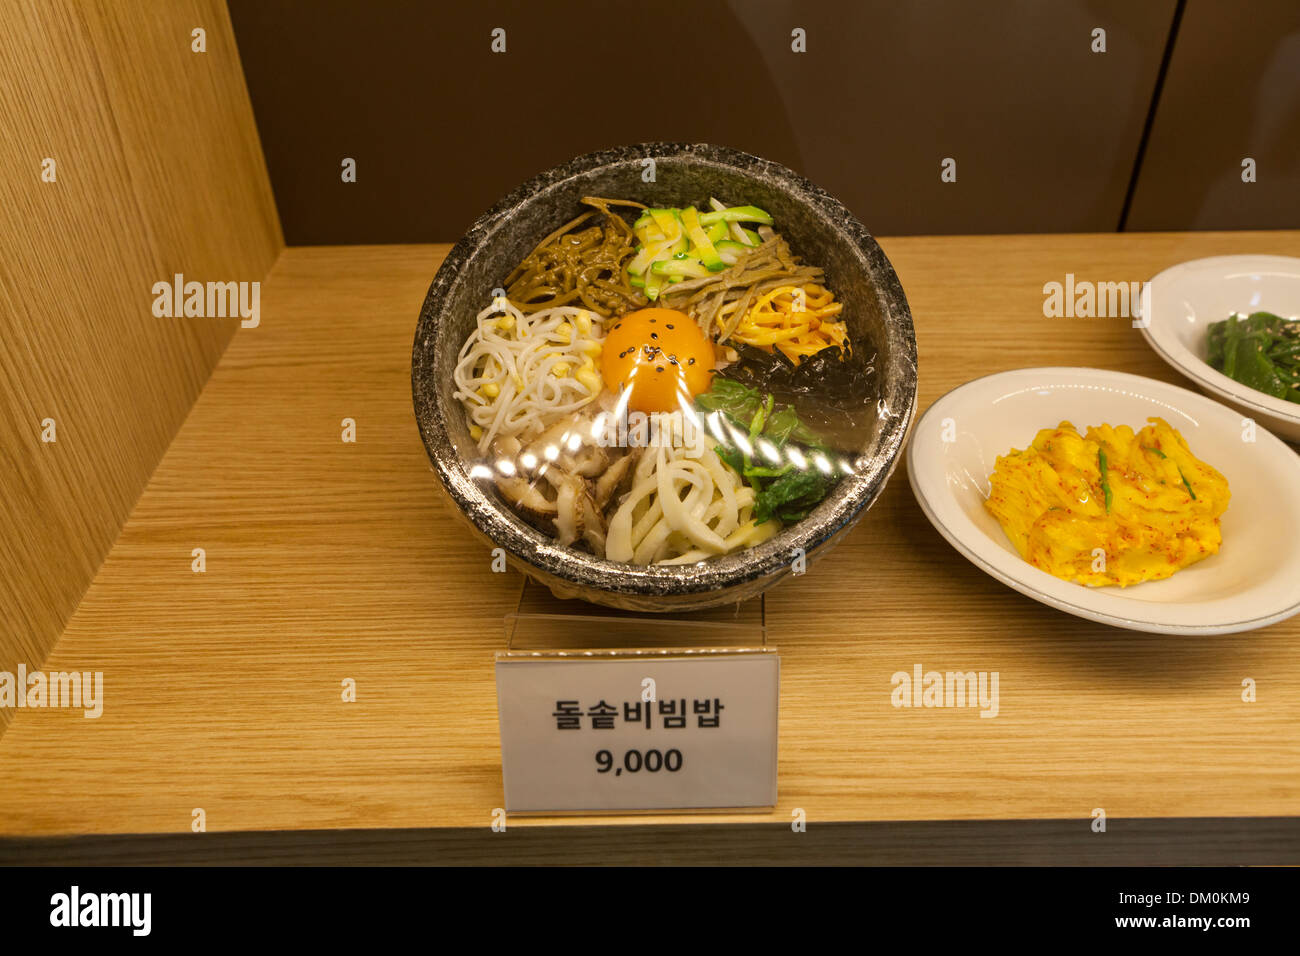 Plastic food model (bibimbap - vegetables over rice) display case at fast food restaurant - Seoul, South Korea Stock Photo